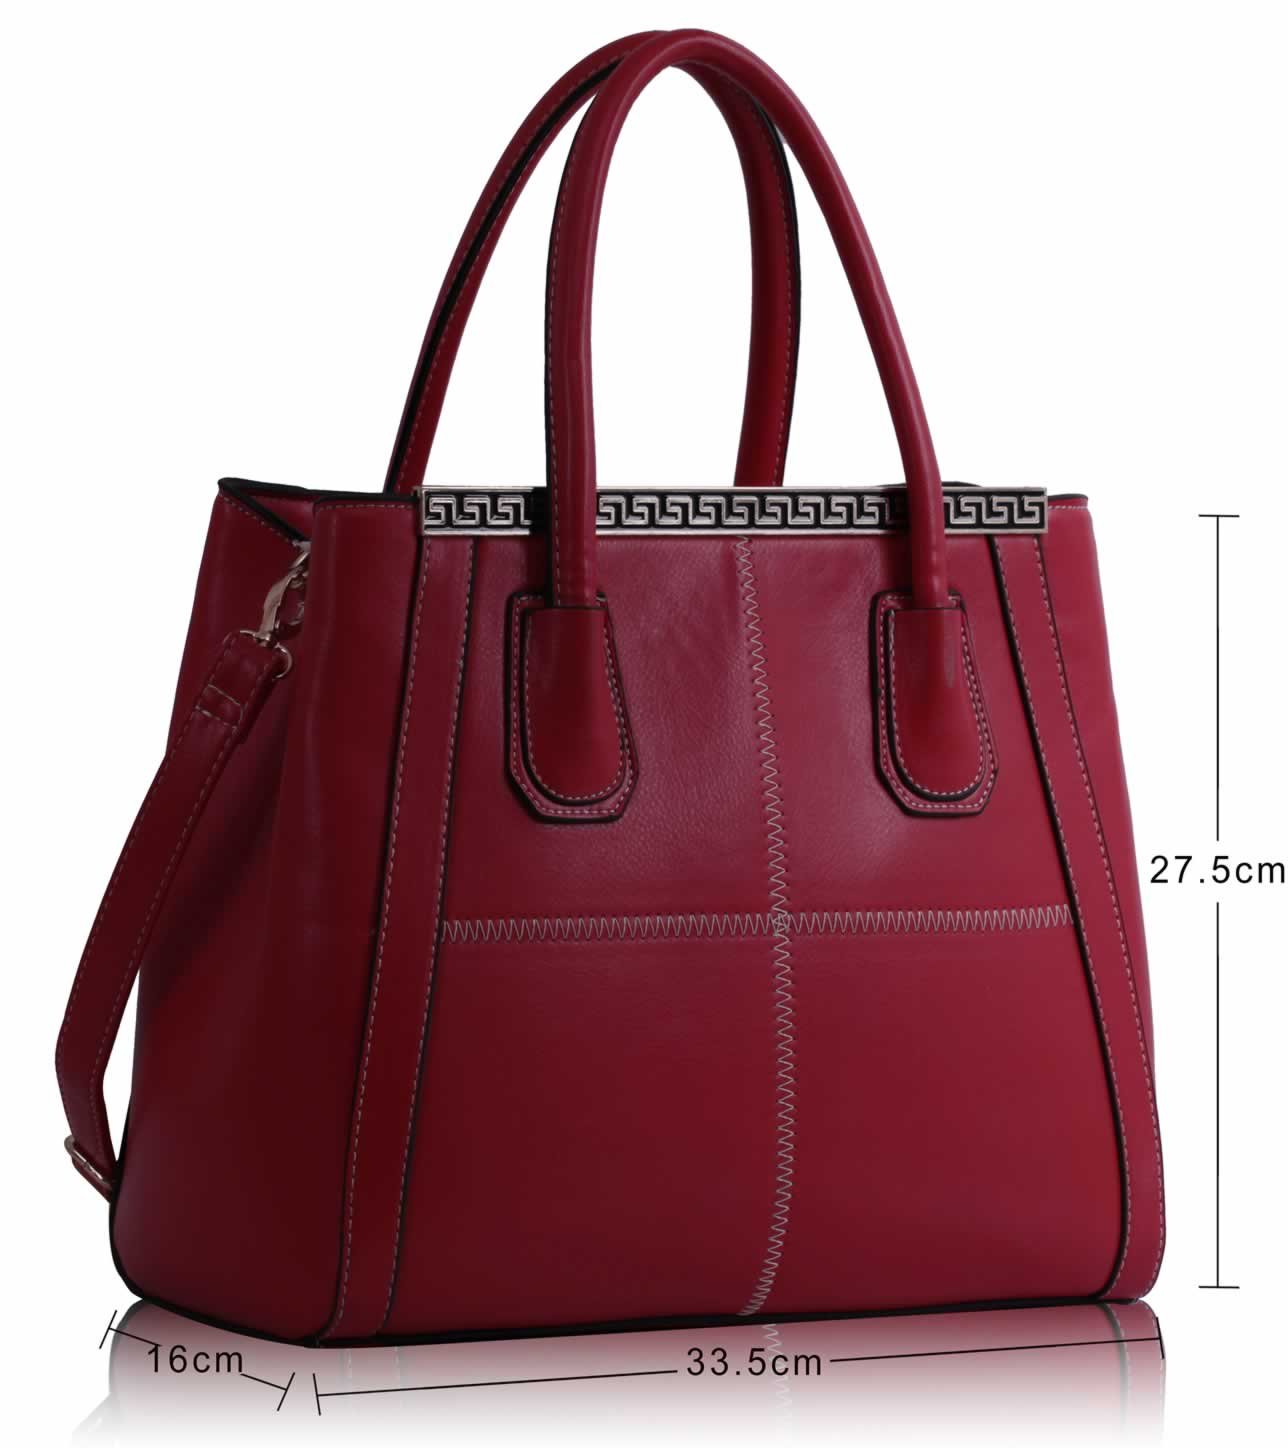 Wholesale Bags :: LS0030A - Red Checkered Fashion Tote Handbag - Ladies handbags, clutch bags ...